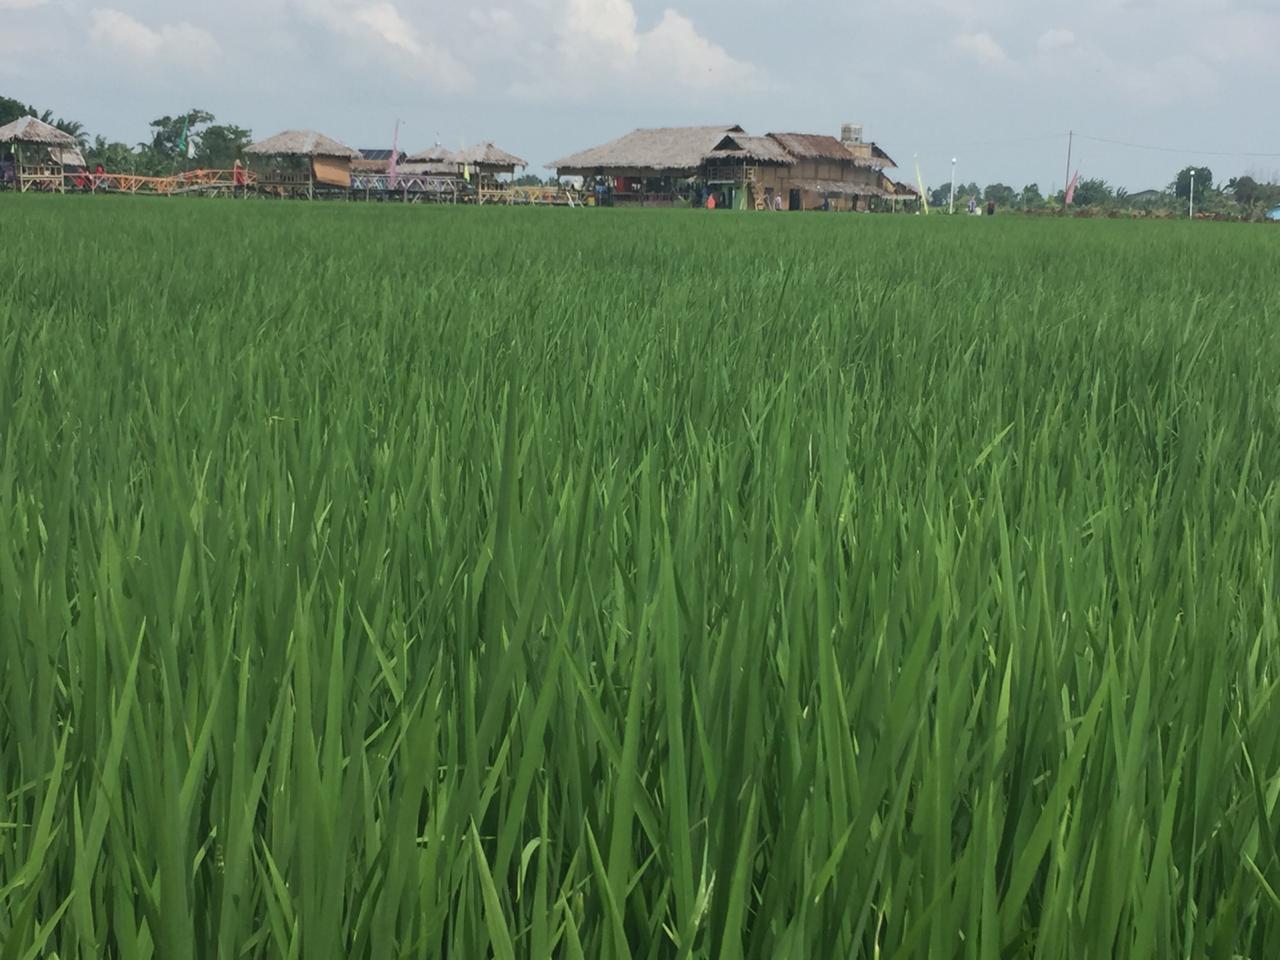 Hamparan tanaman padi menghijau yang jadi obyek wisata sawah. Foto: Barita News Lumbanbatu / Mongabay Indonesia